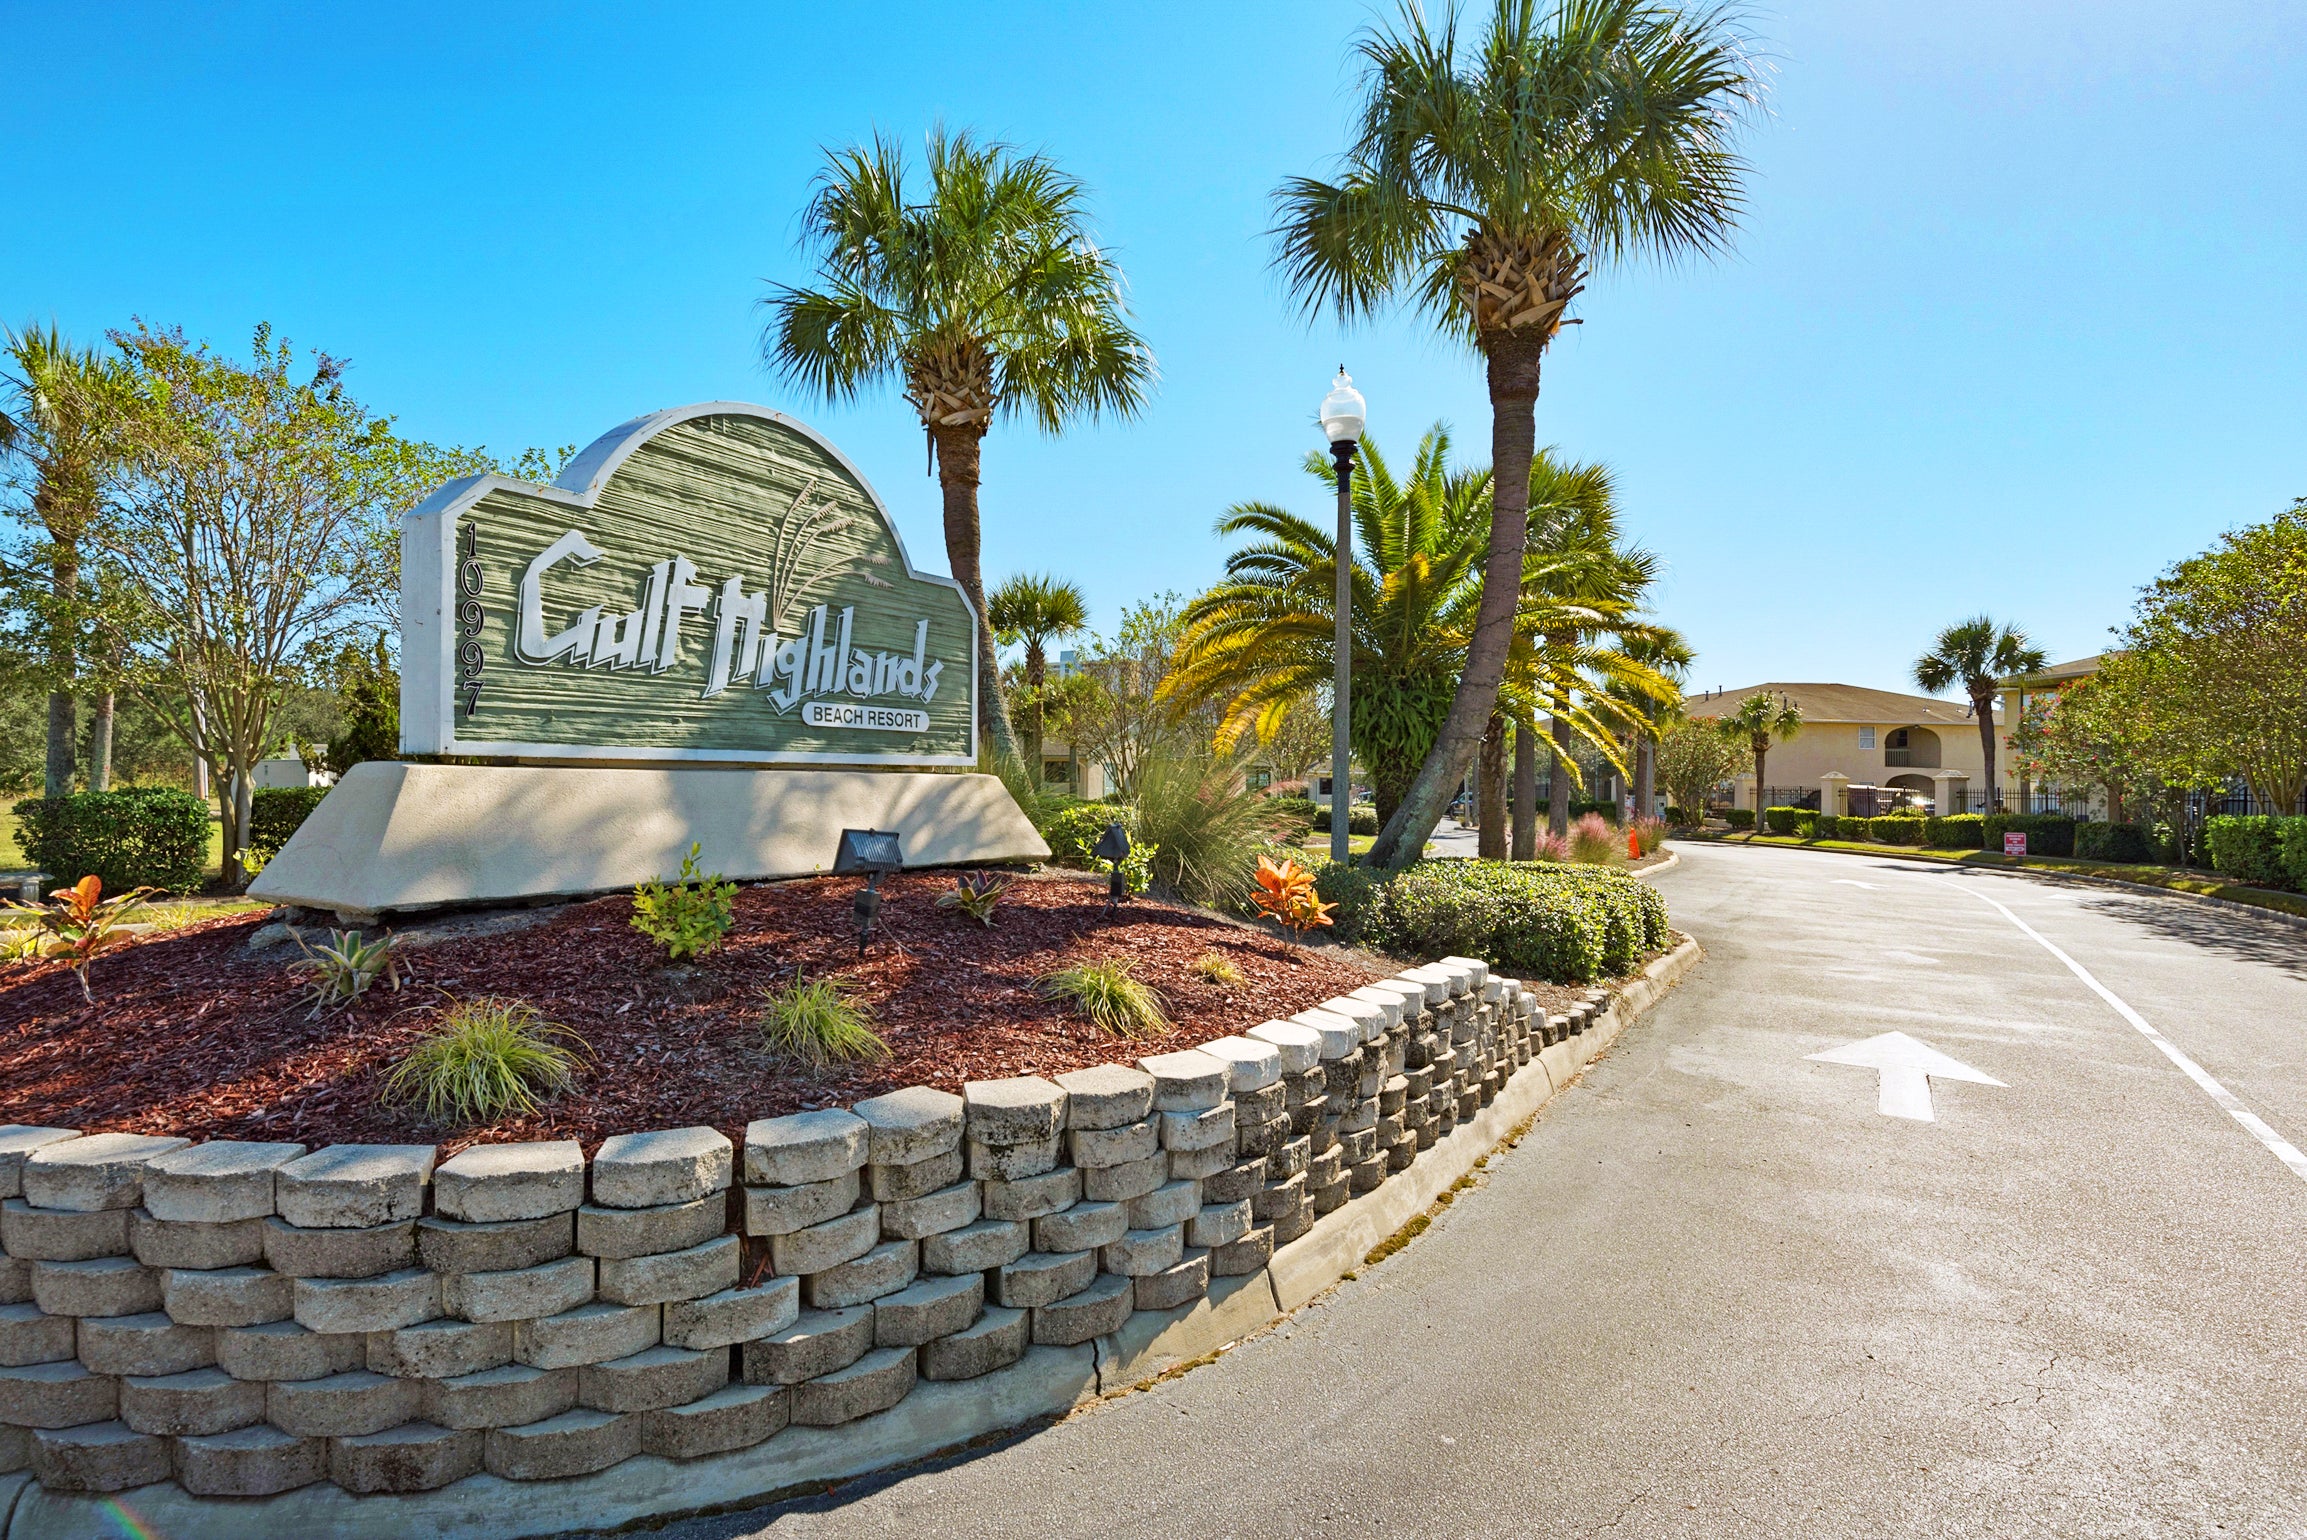 Entrance Gulf Highlands Beach Resort